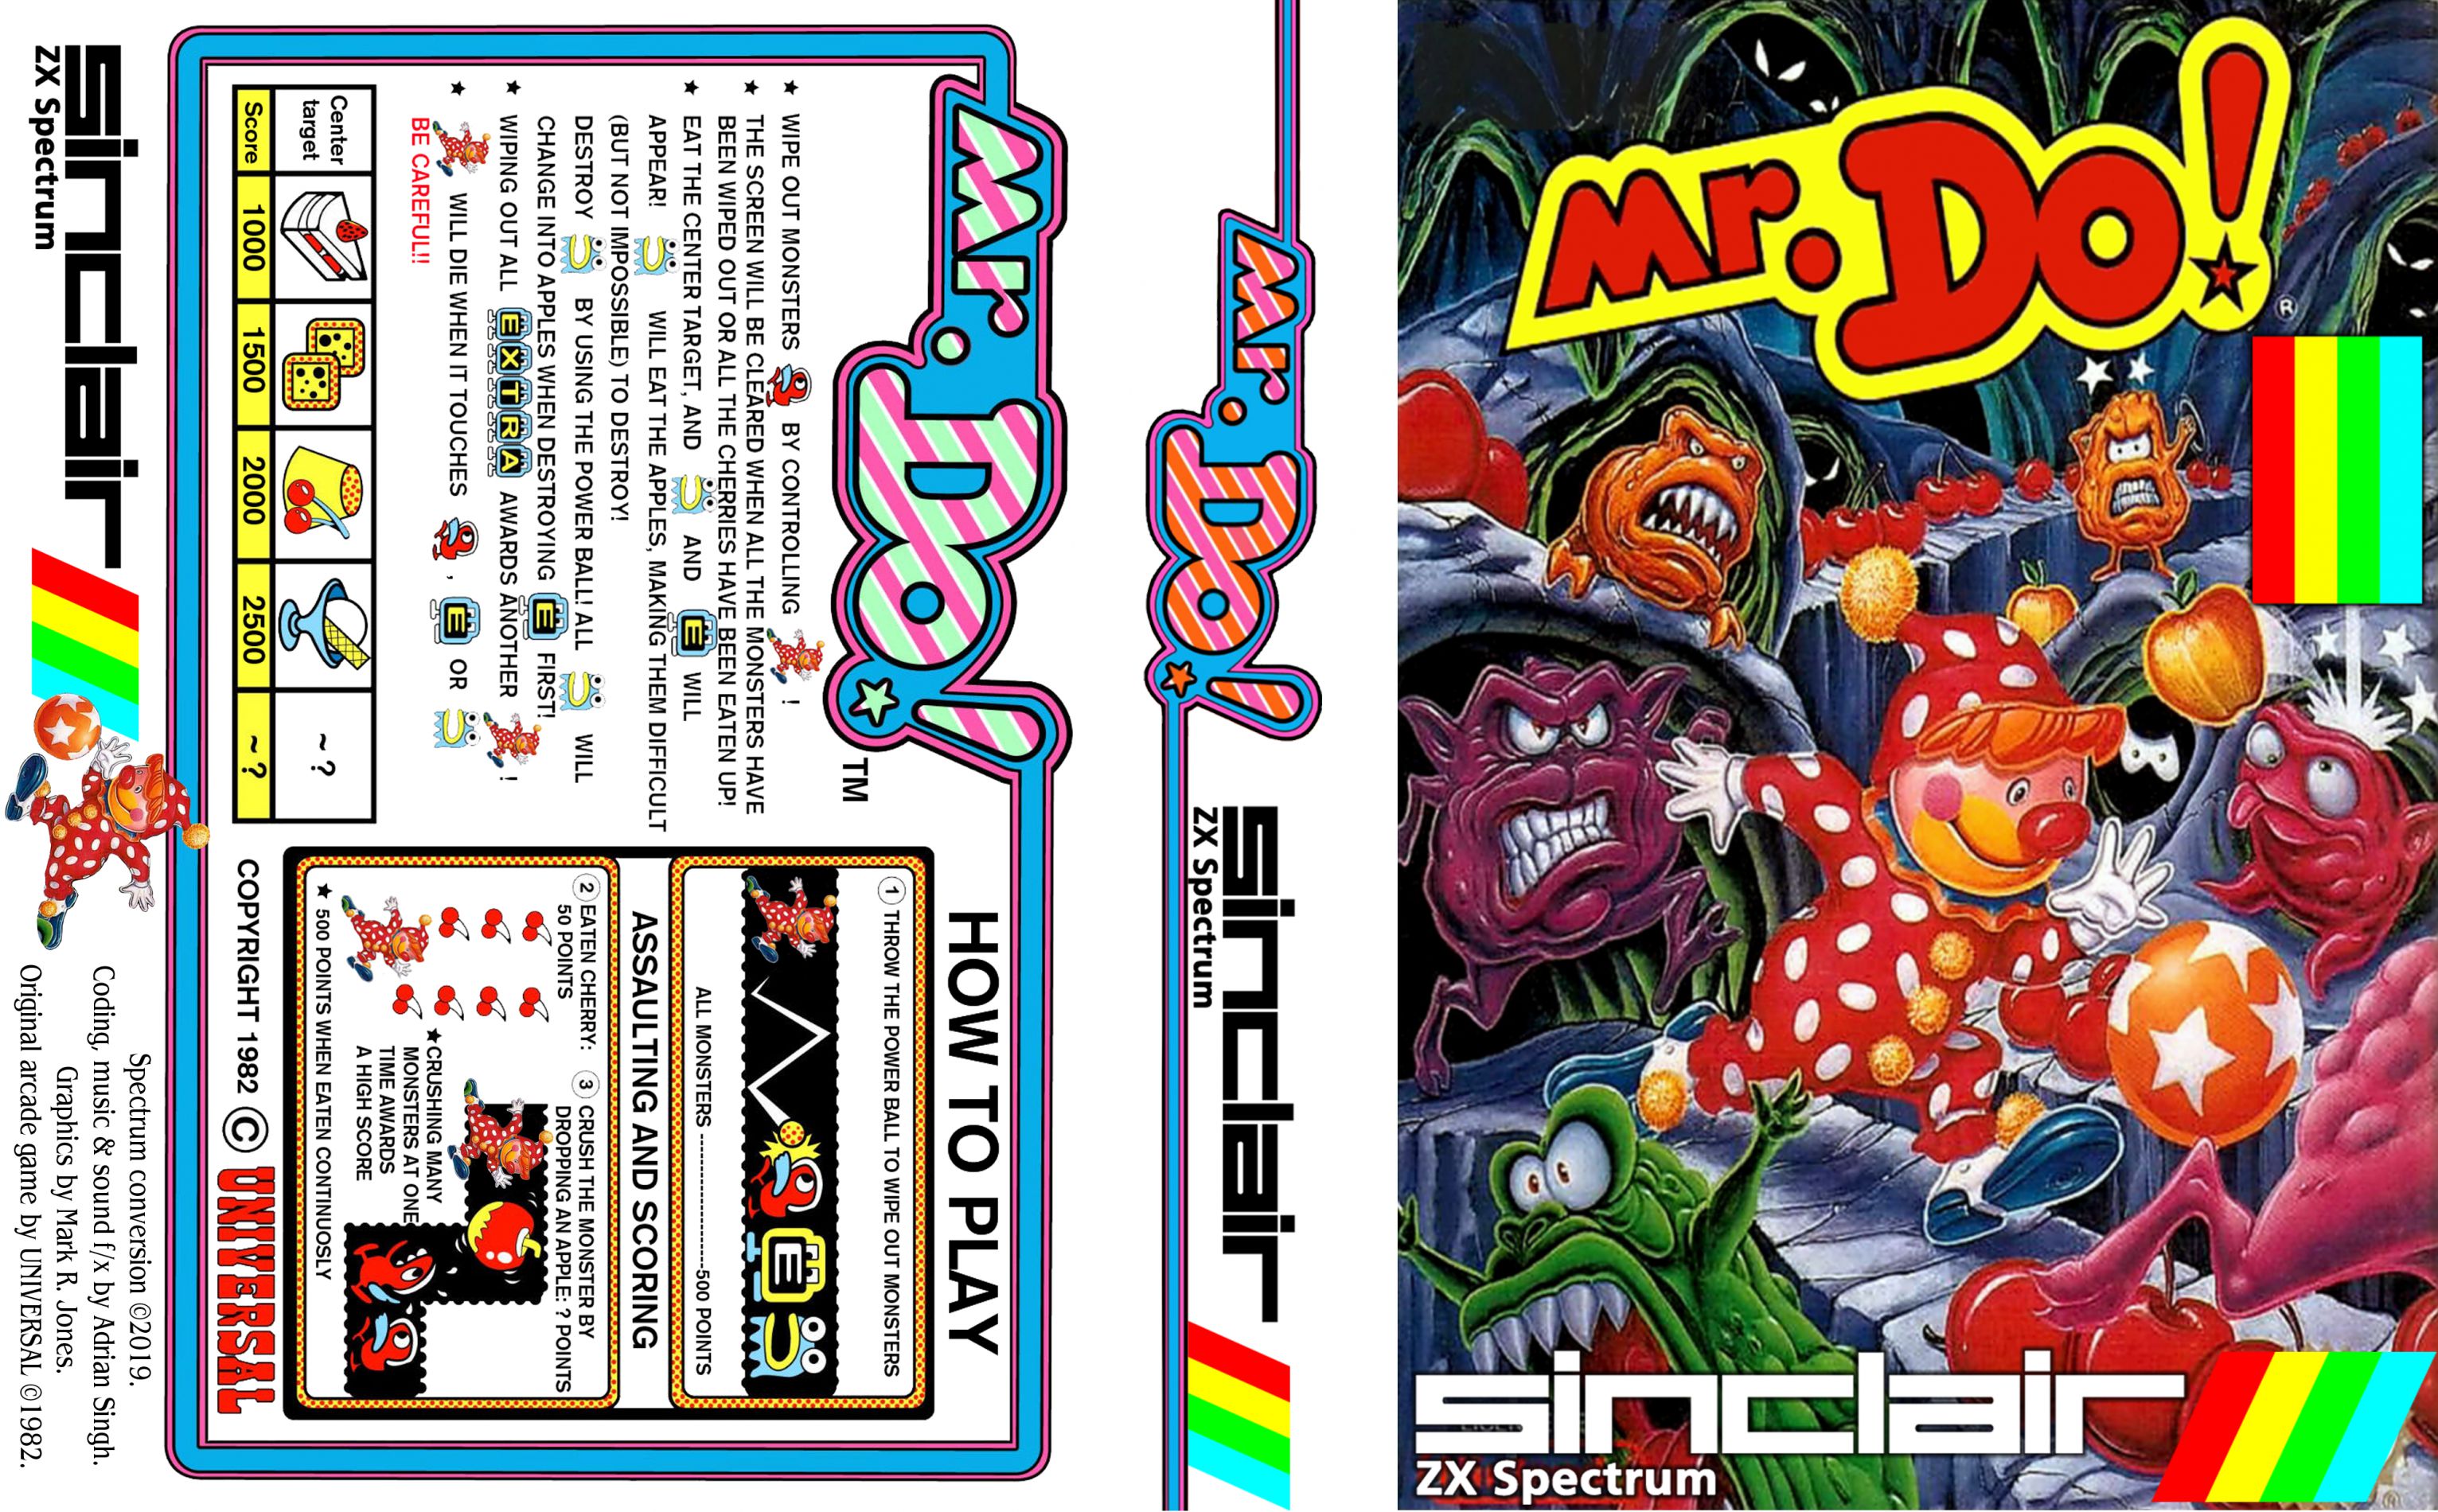 Sinclair ZX Spectrum games  - Mr Do! at Spectrum Computing